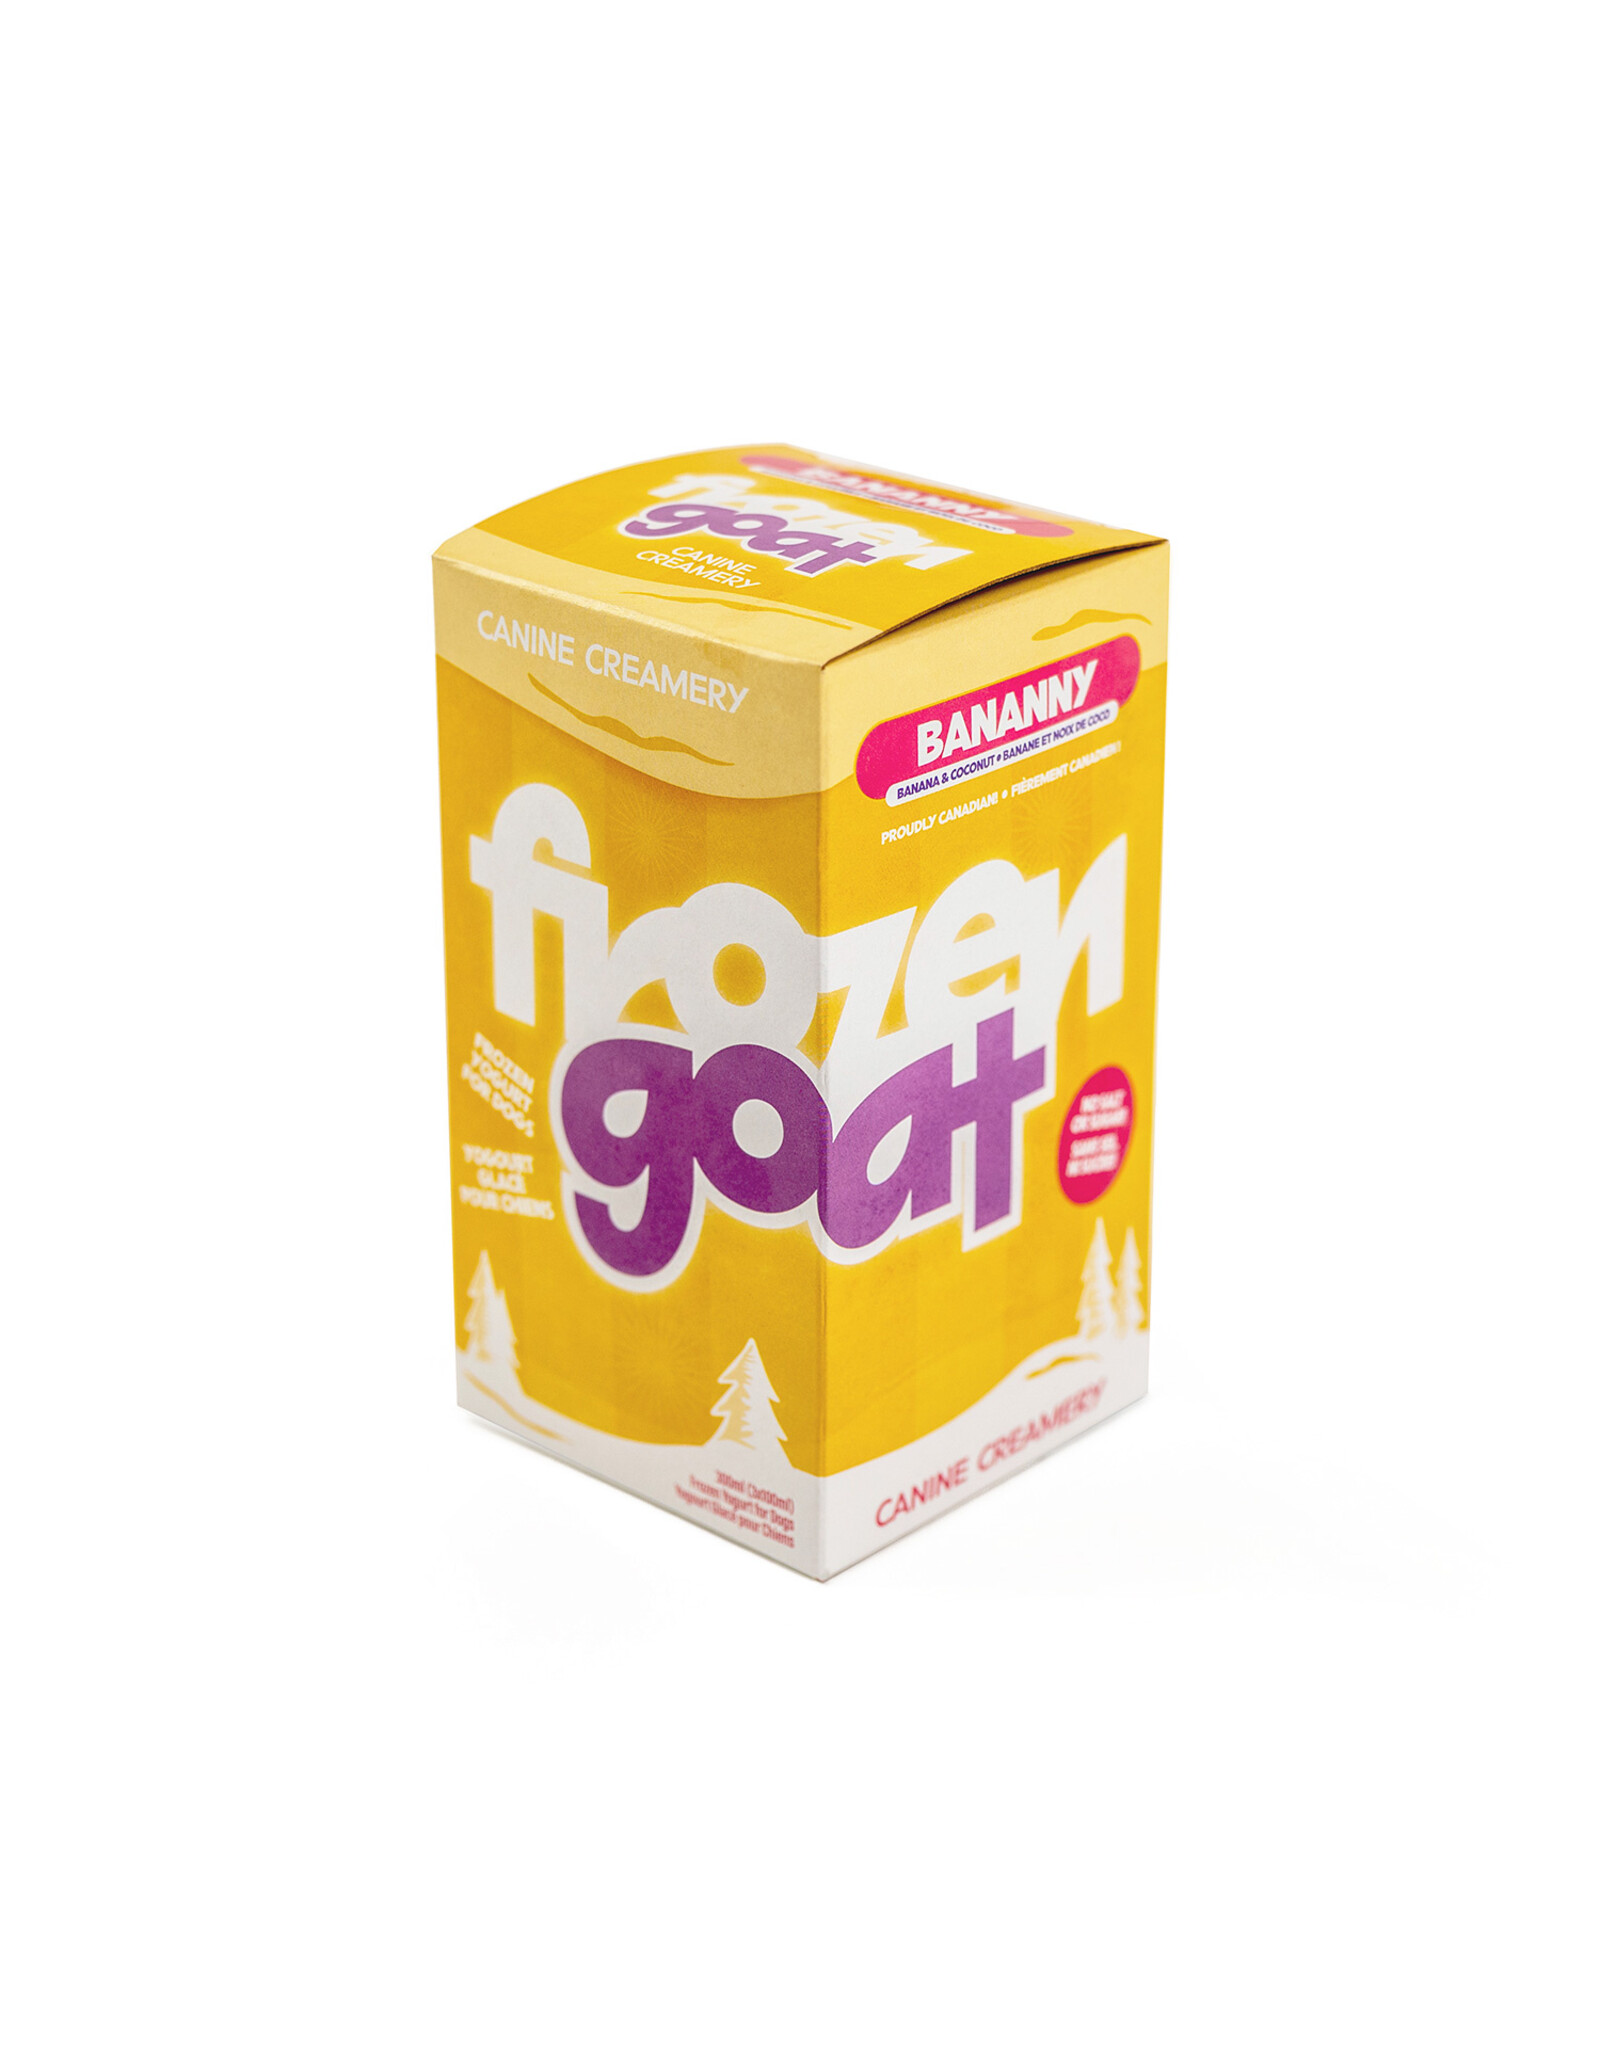 Frozen Goat Bananny – 300ml